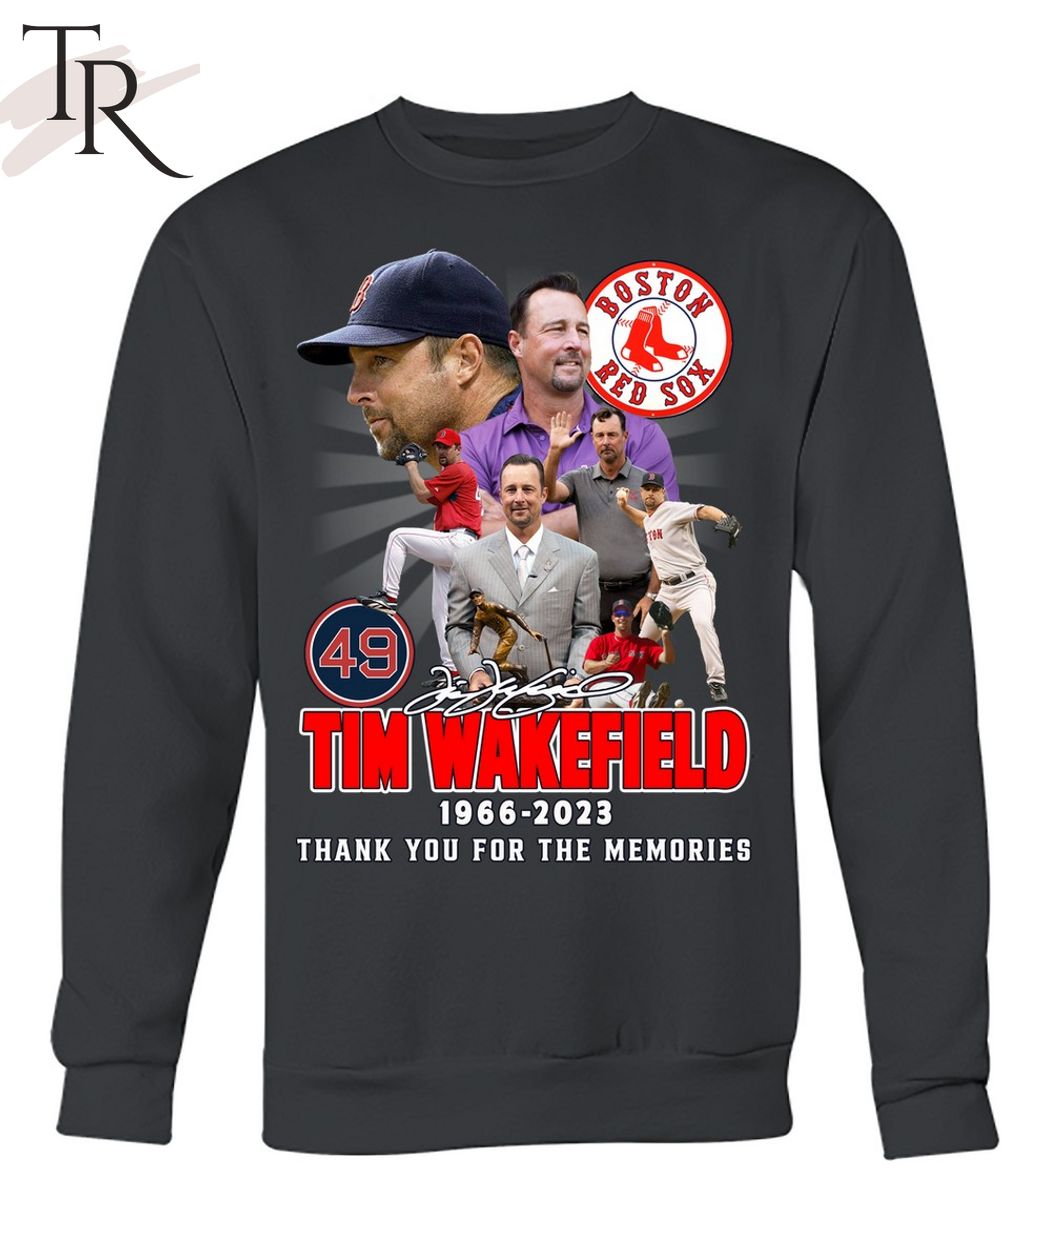 Boston Red Sox Major League Baseball 3D Print Hawaiian Shirt - Torunstyle